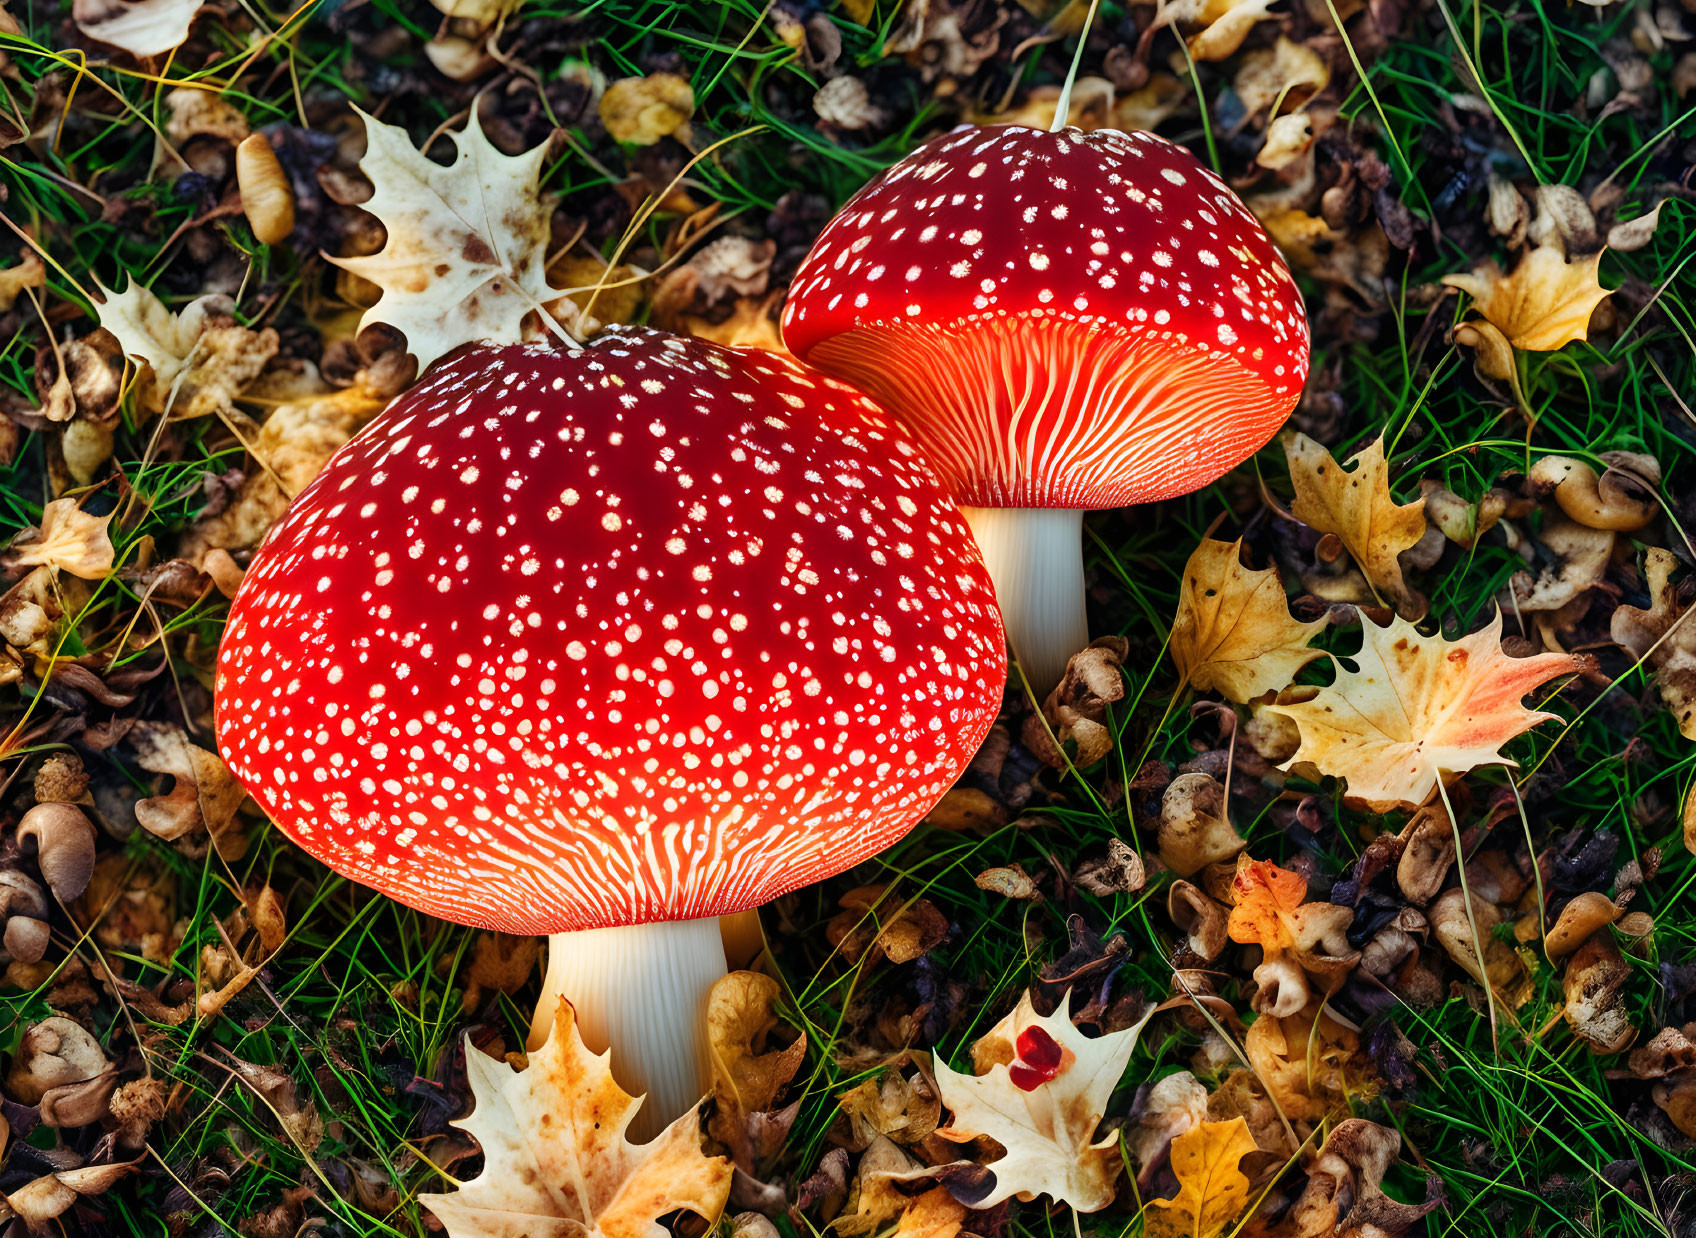 Mushrooms are beautyfull